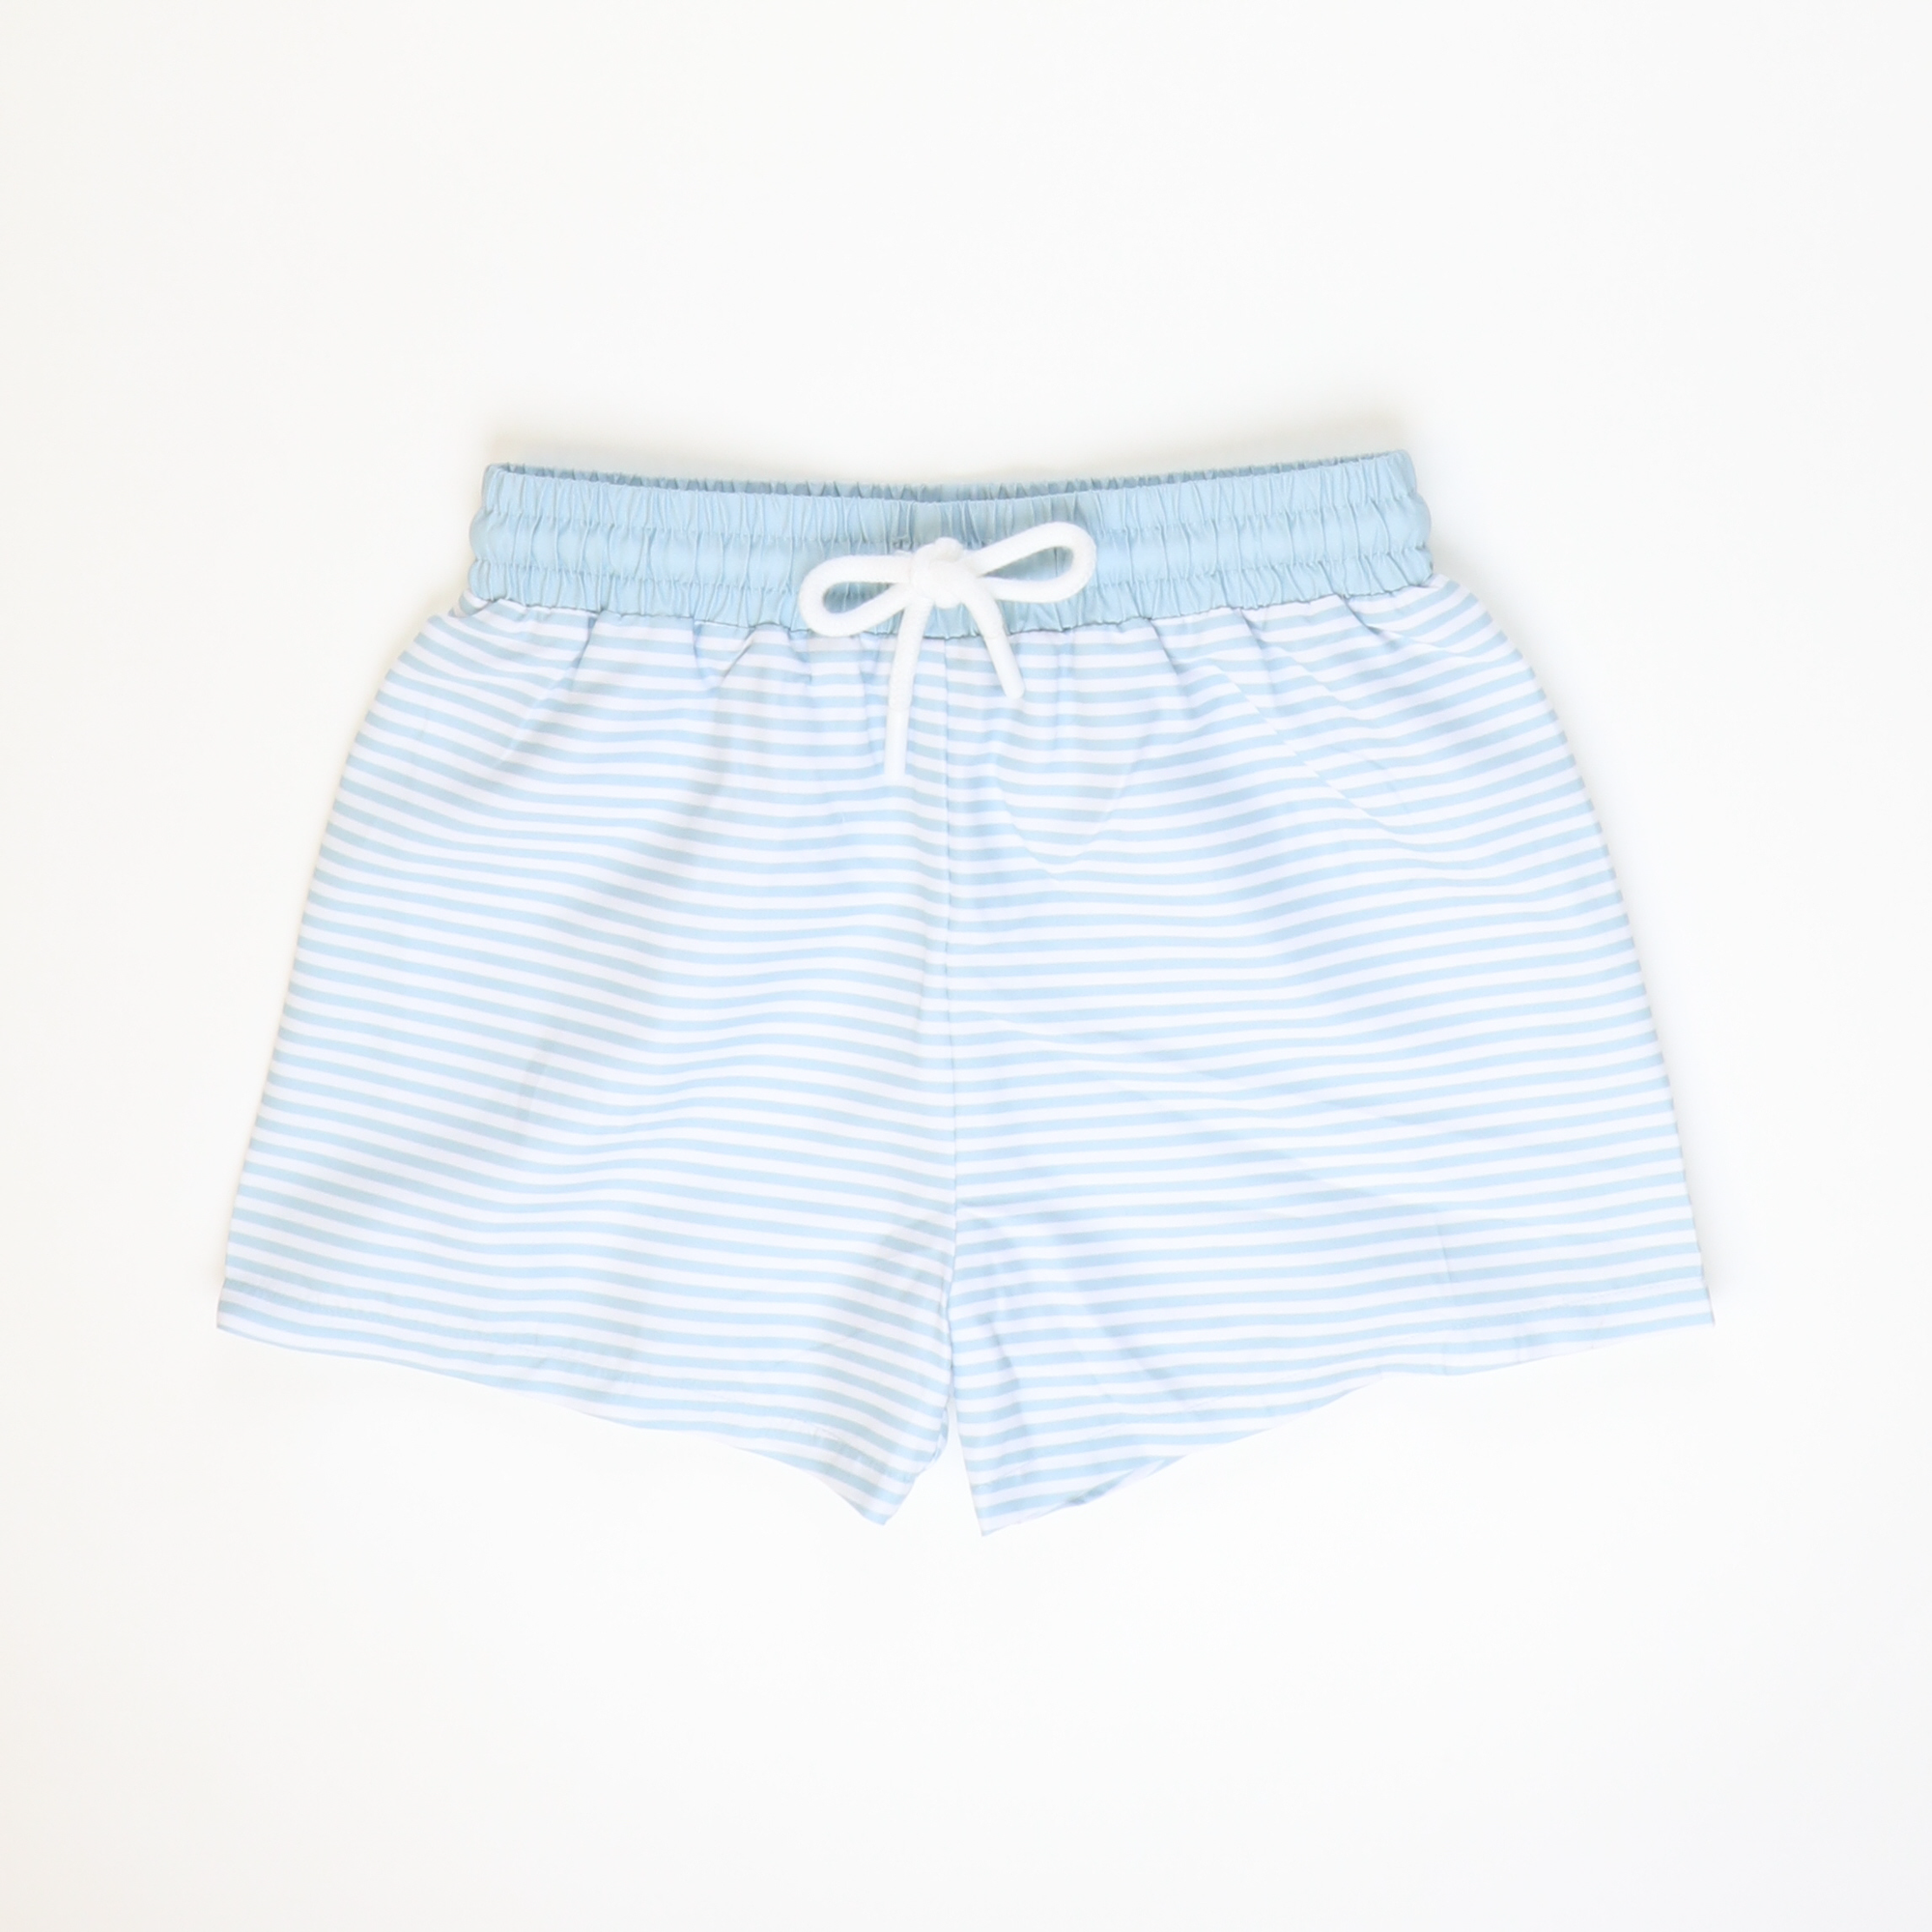 boys-swim-trunks-light-blue-stripe